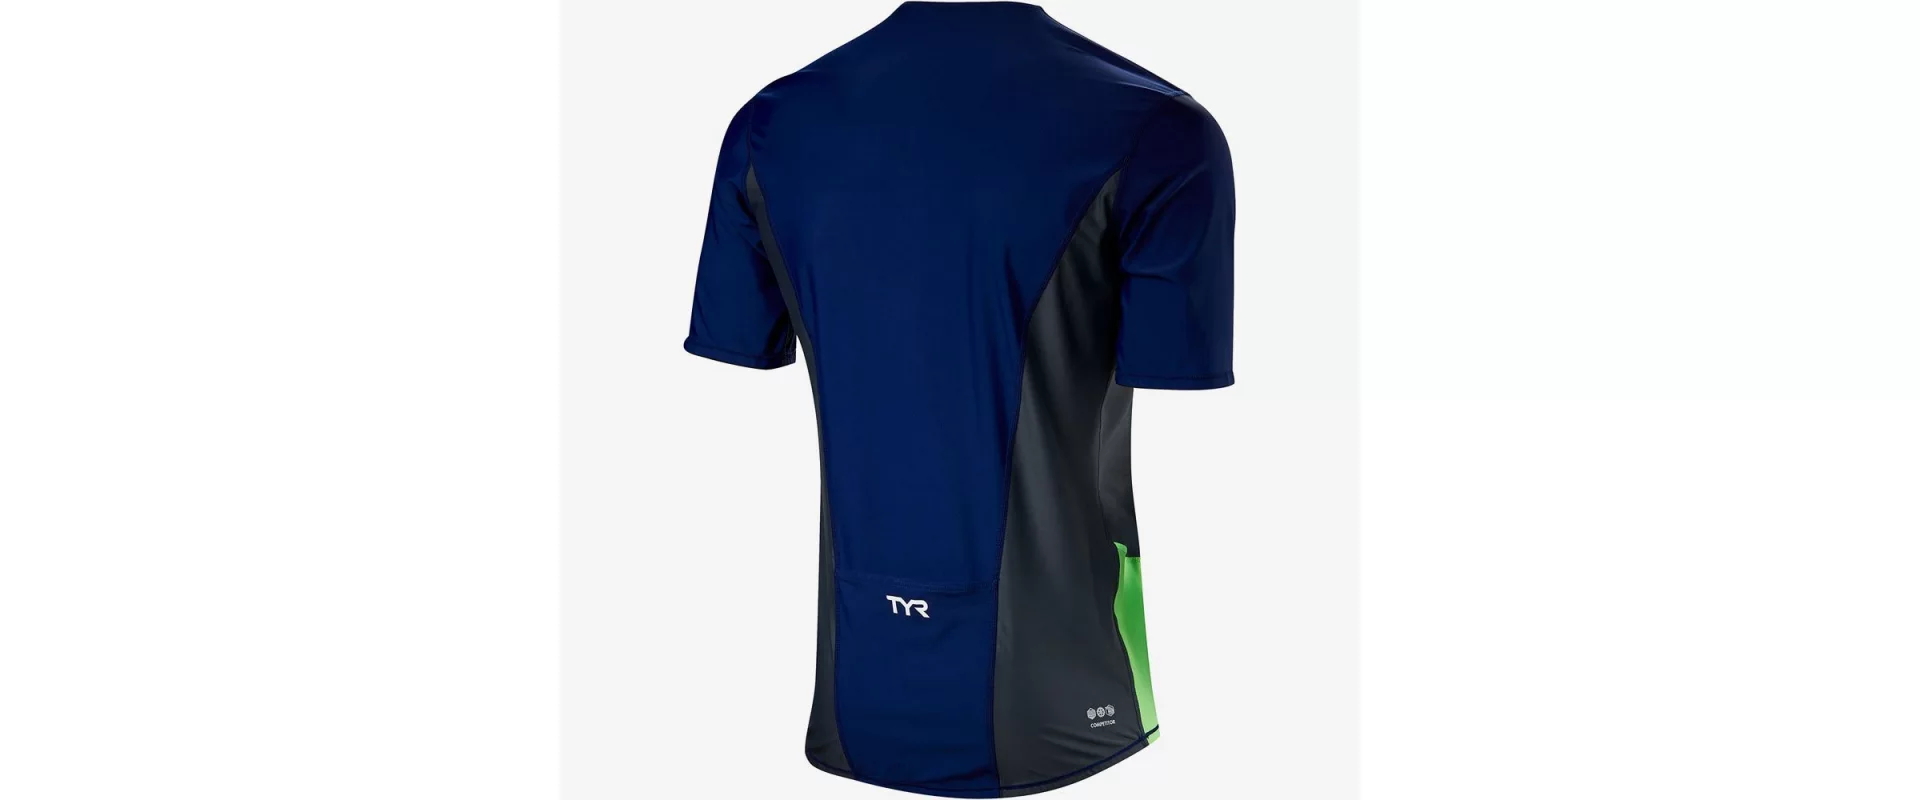 TYR Men's Competitor Short Sleeve Top / Мужская стартовая футболка фото 1